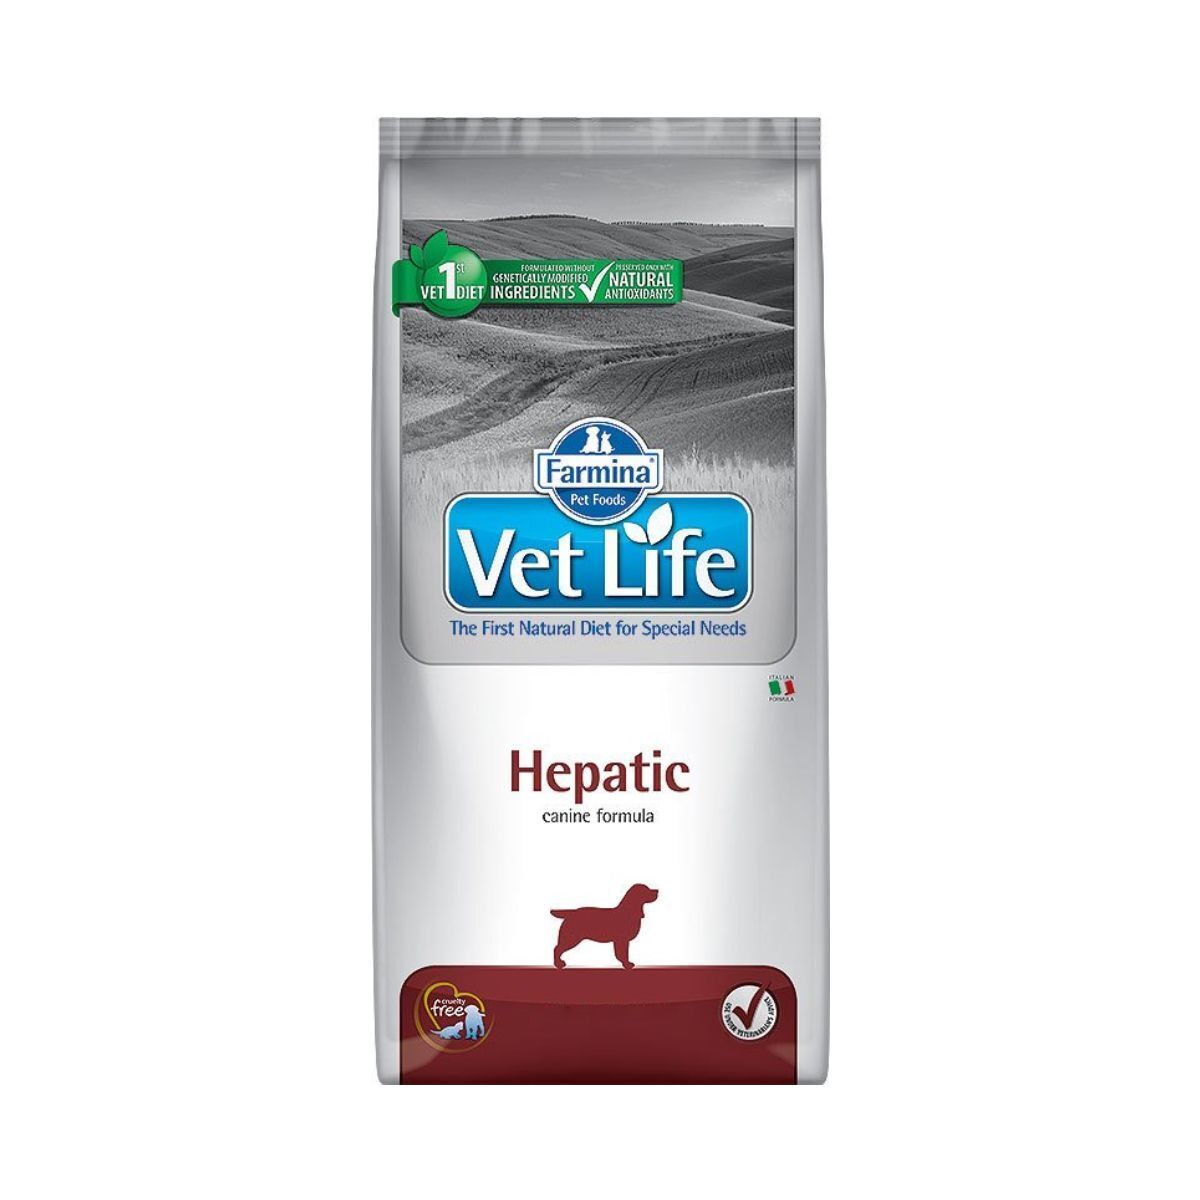 Farmina gastrointestinal для кошек. Корм для собак vet Life Hypoallergenic. Farmina vet Life hepatic для собак. Vet Life Diabetic корм. Farmina vet Life hepatic консервы.